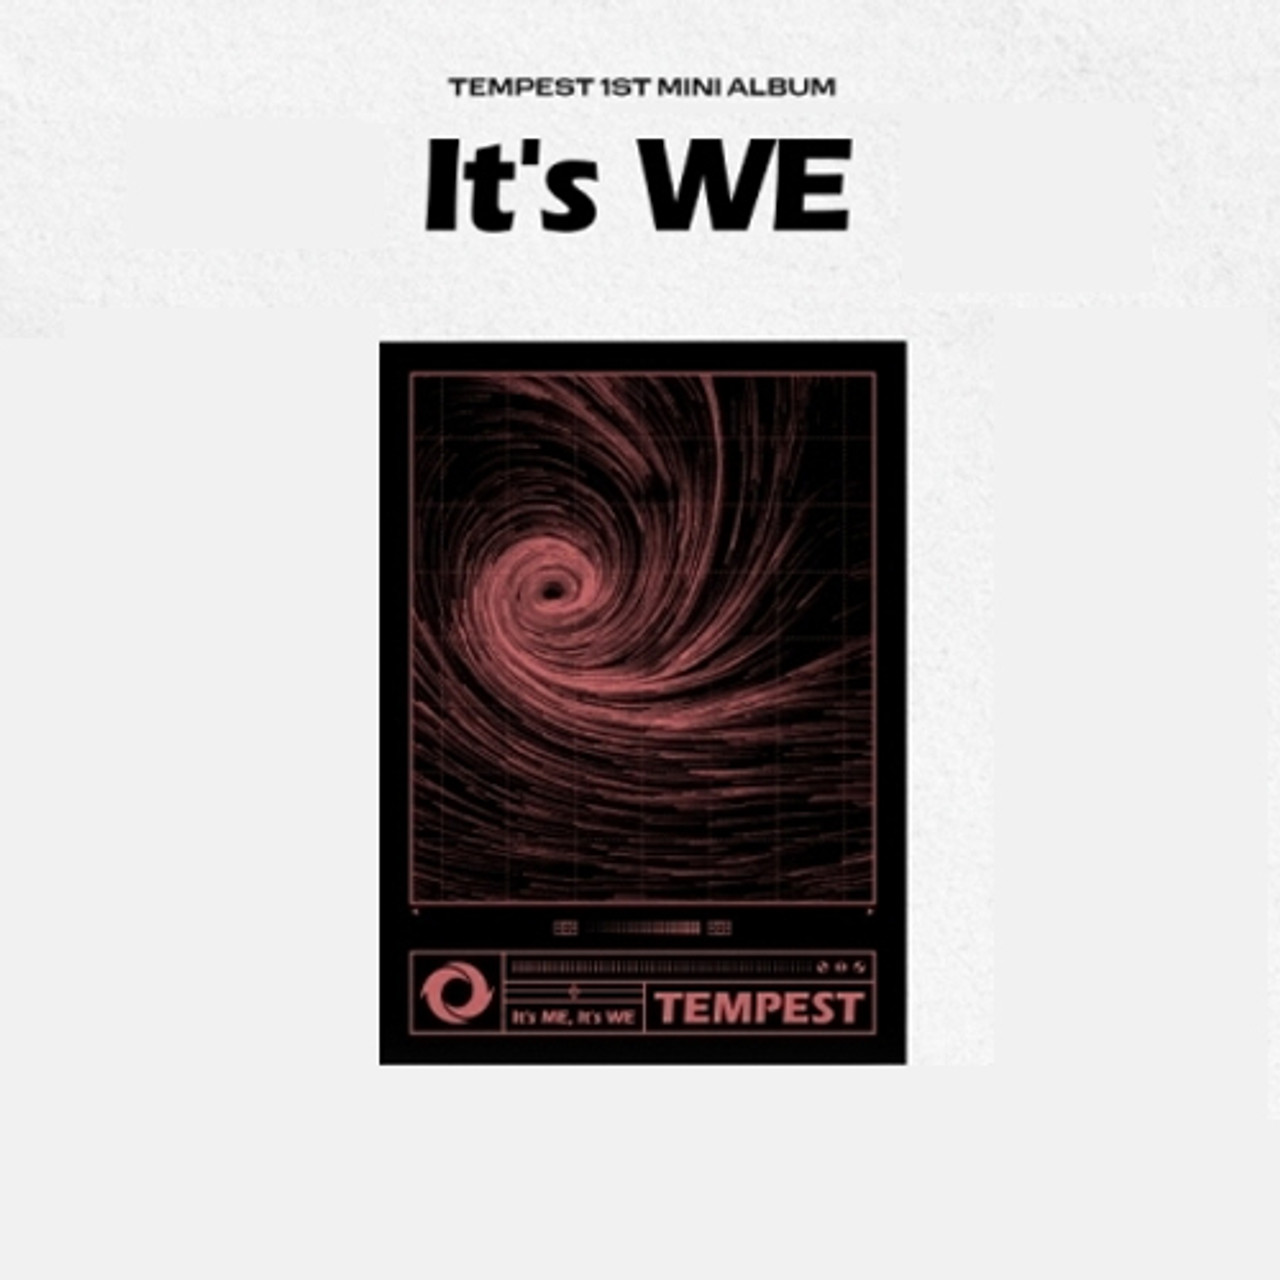 TEMPEST  It’s ME Its WE We Ver